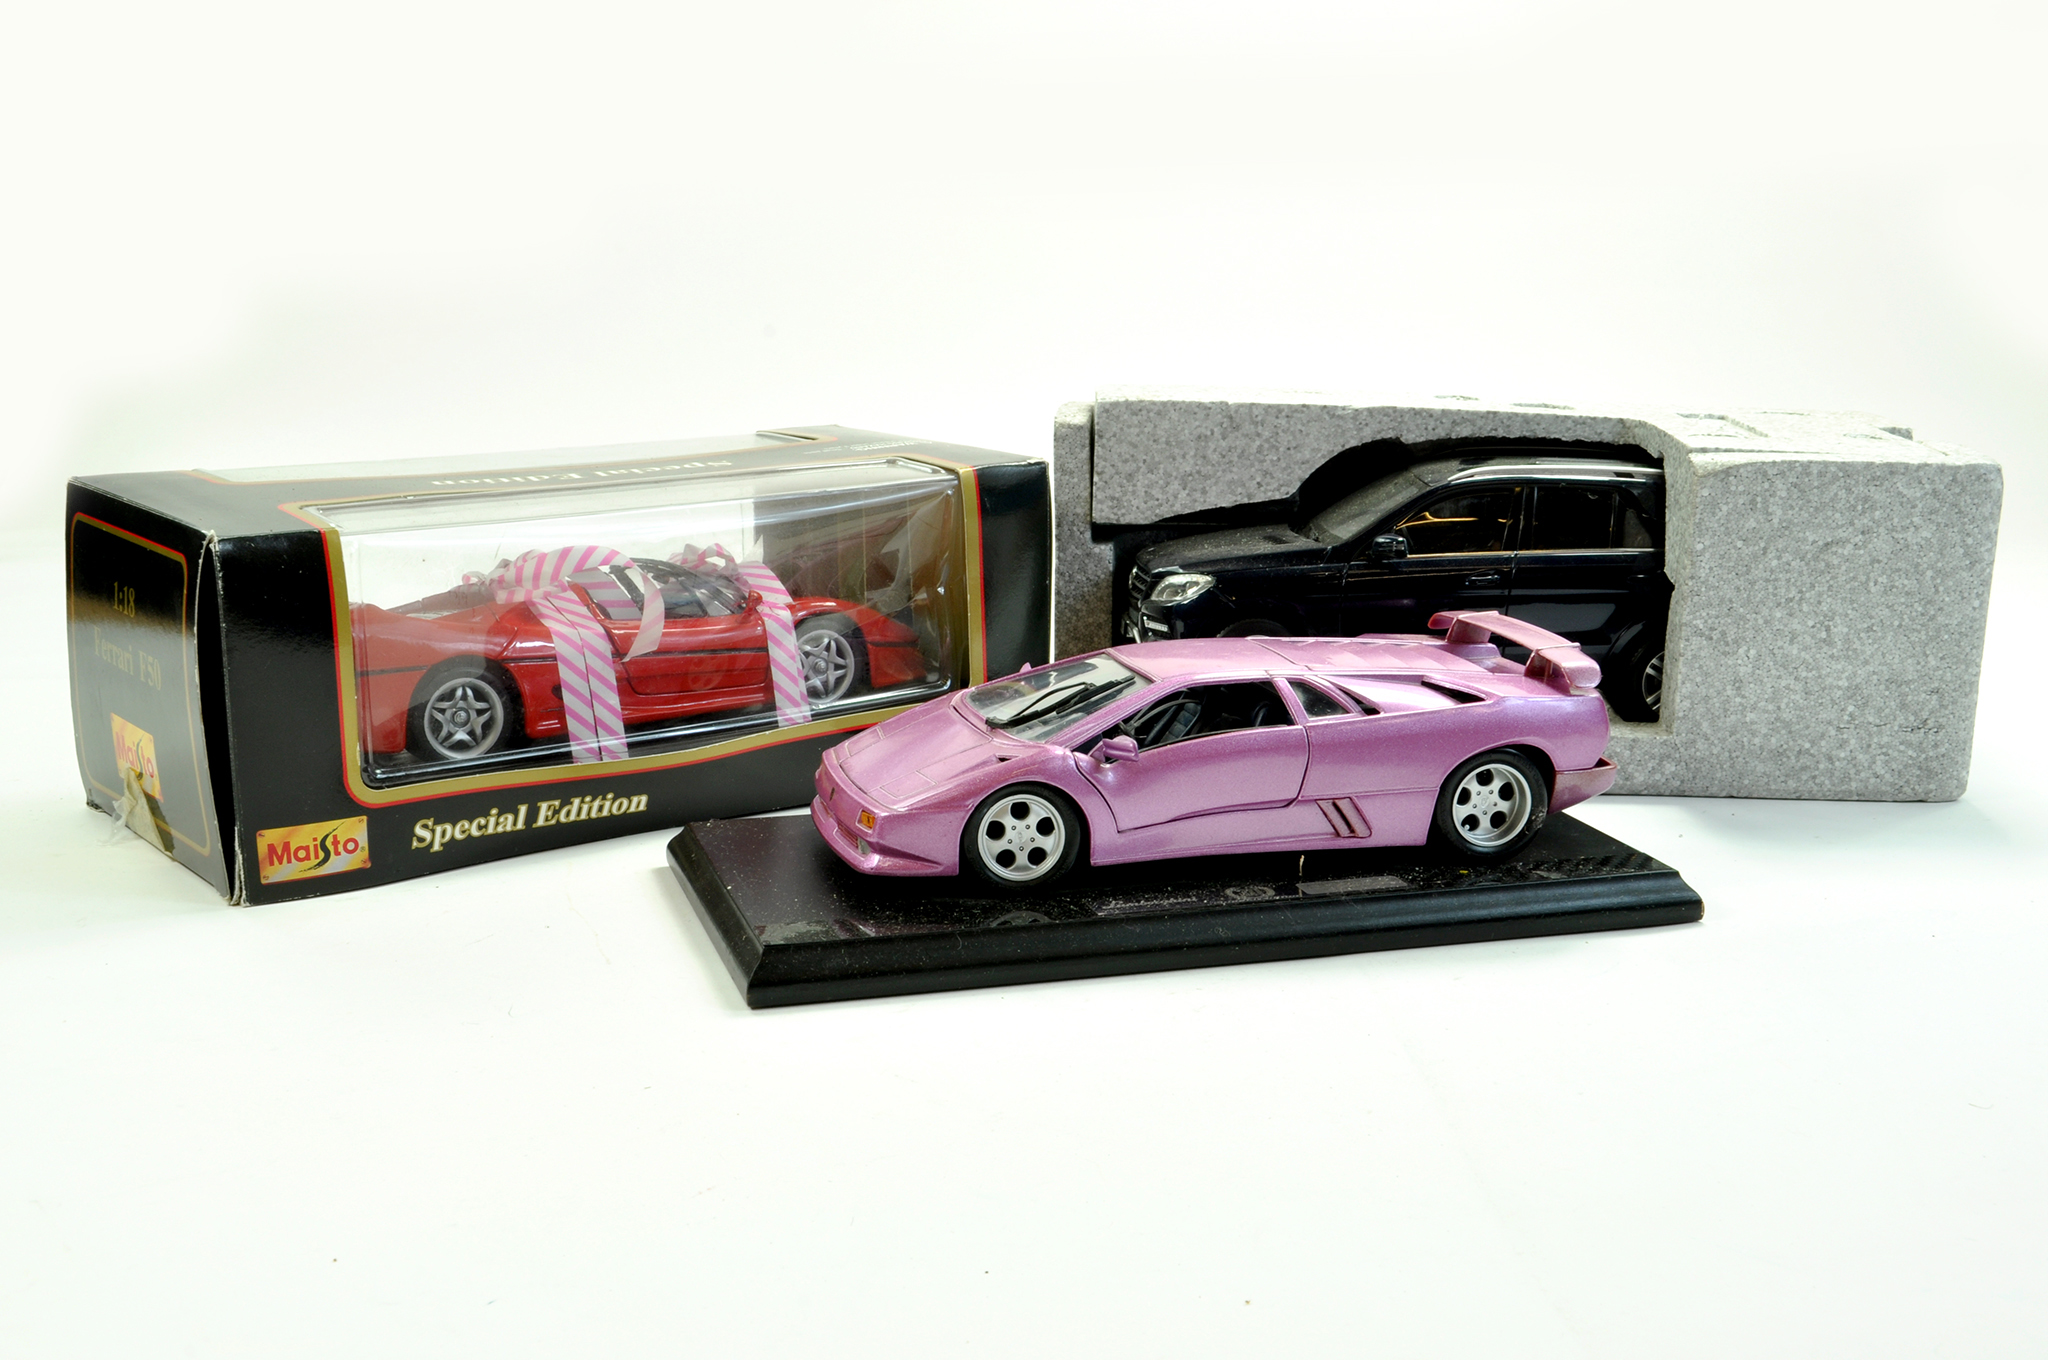 Trio of 1/18 diecast models comprising Lamborghini, Maisto Ferrari F50 and Mercedes 4X4. Generally